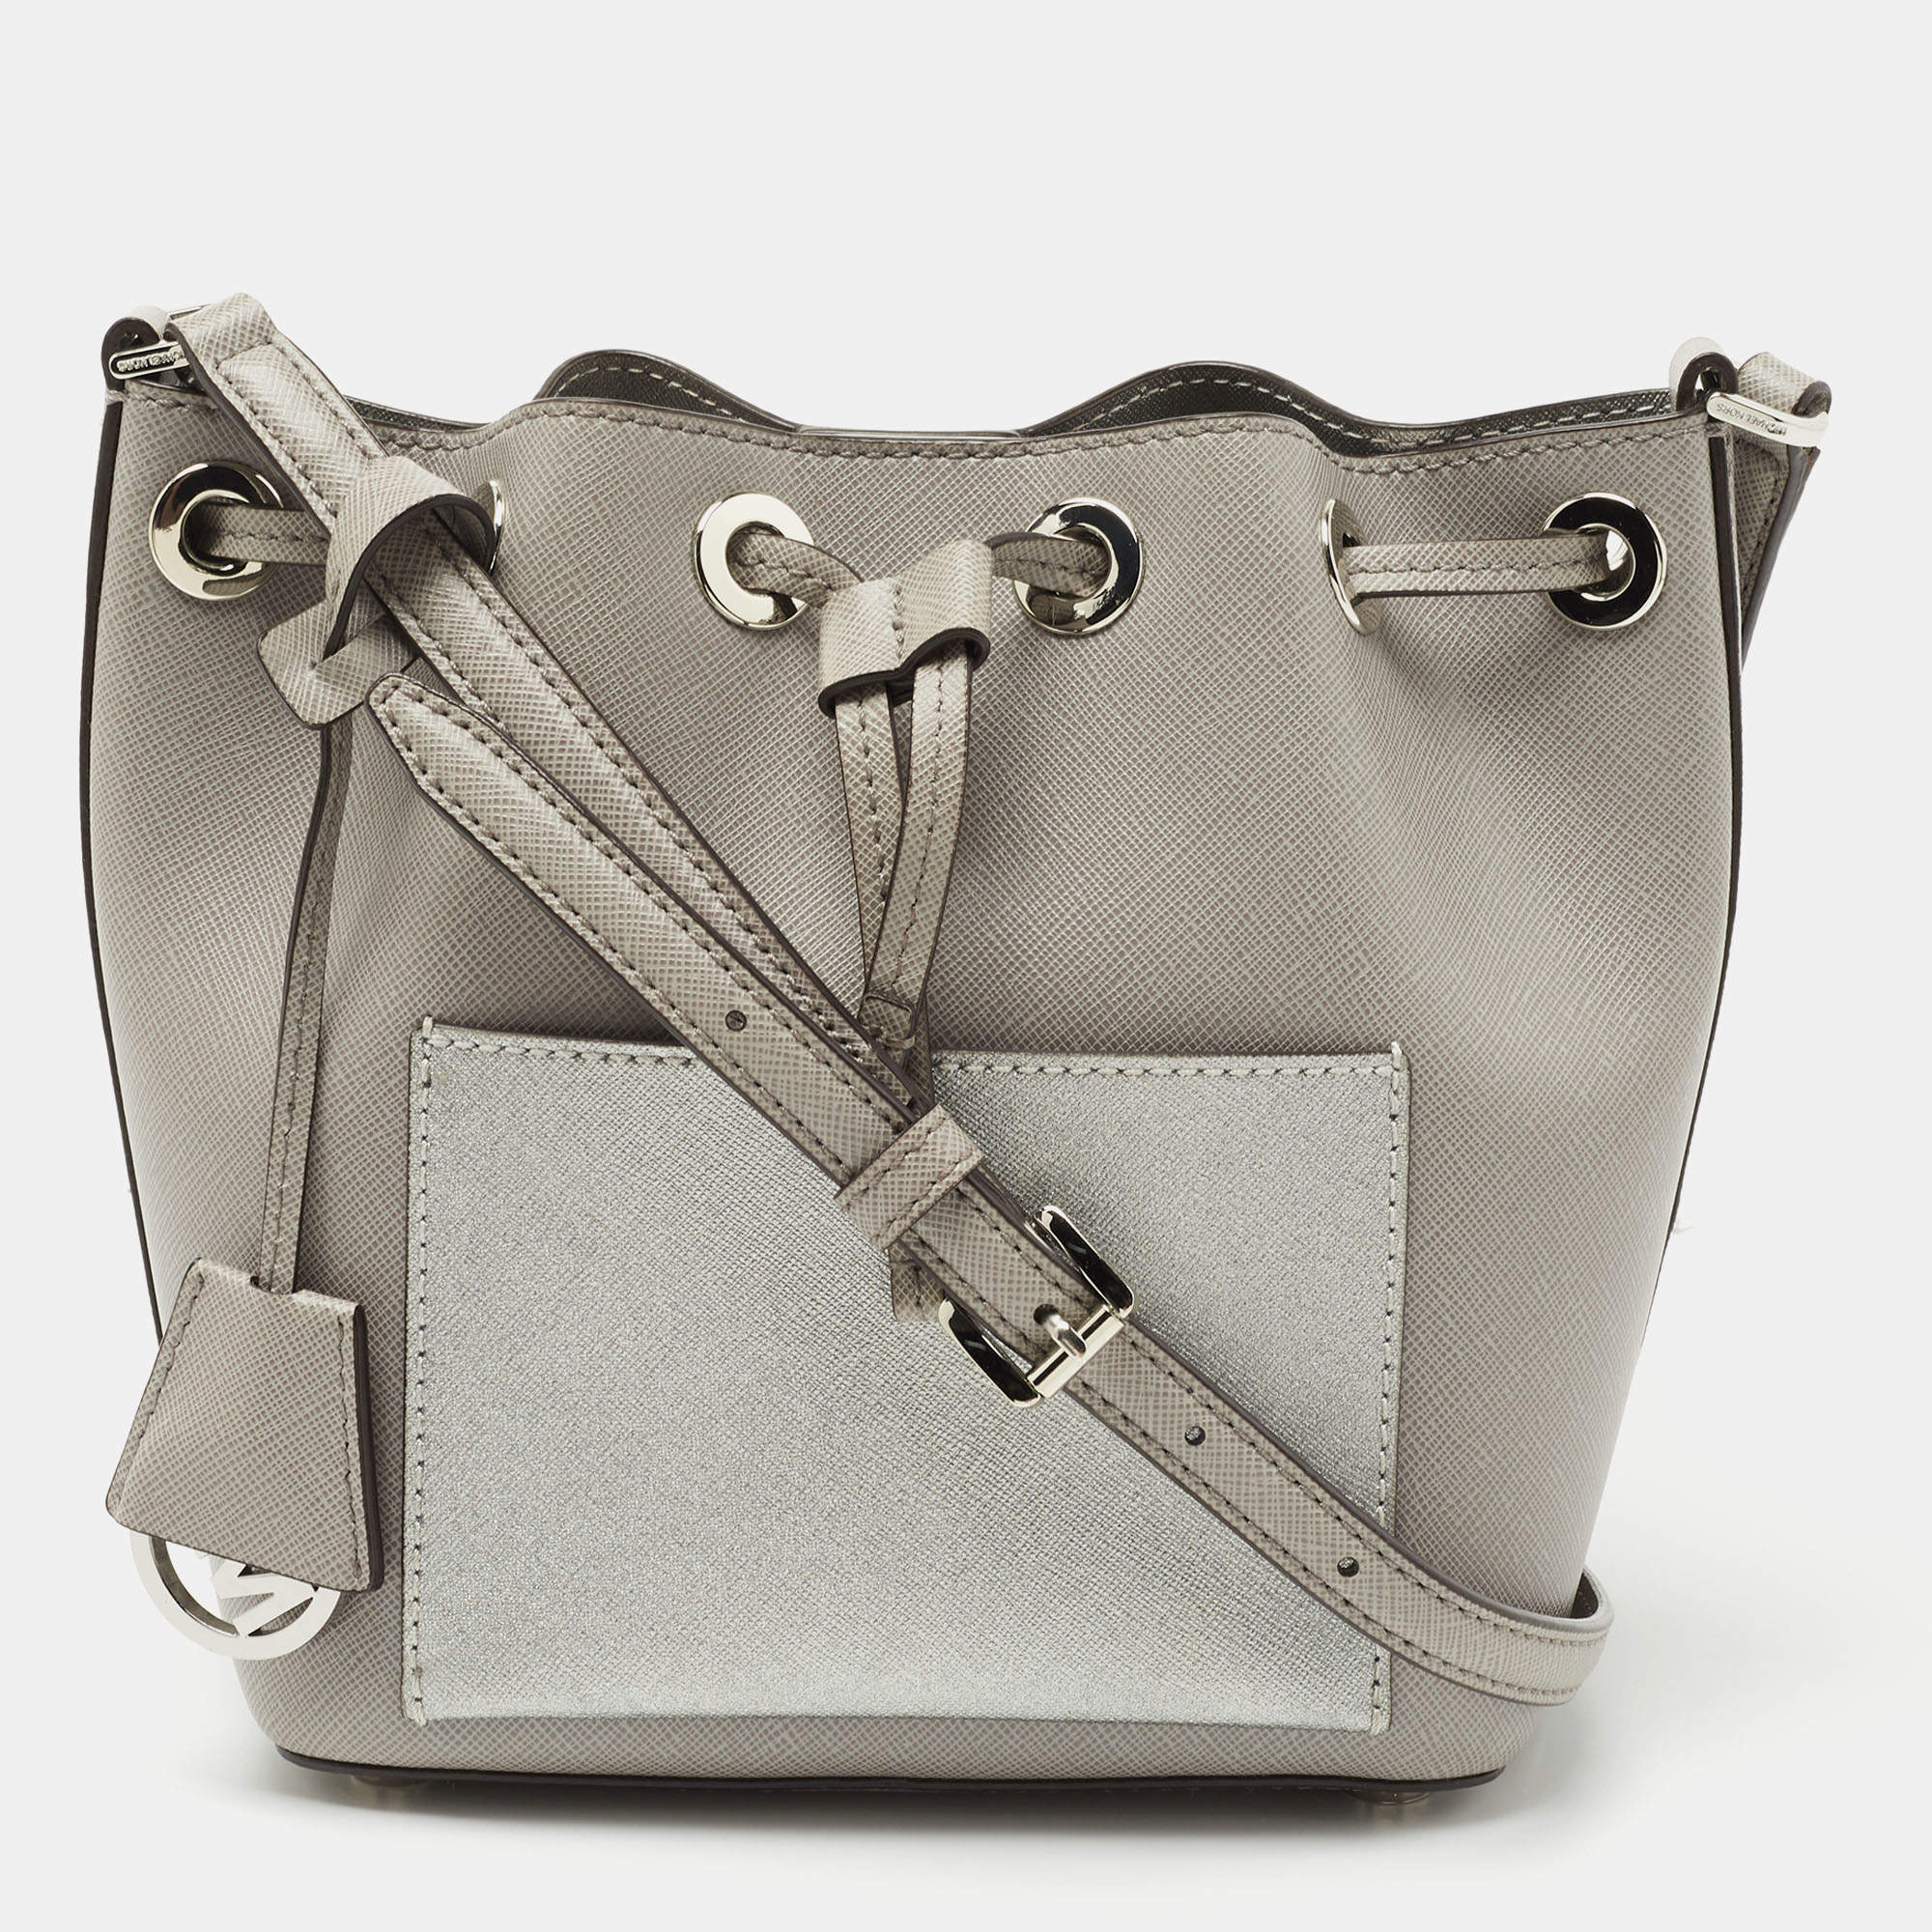 Michael Kors Grey/Silver Saffiano Leather Small Greenwich Bucket Bag